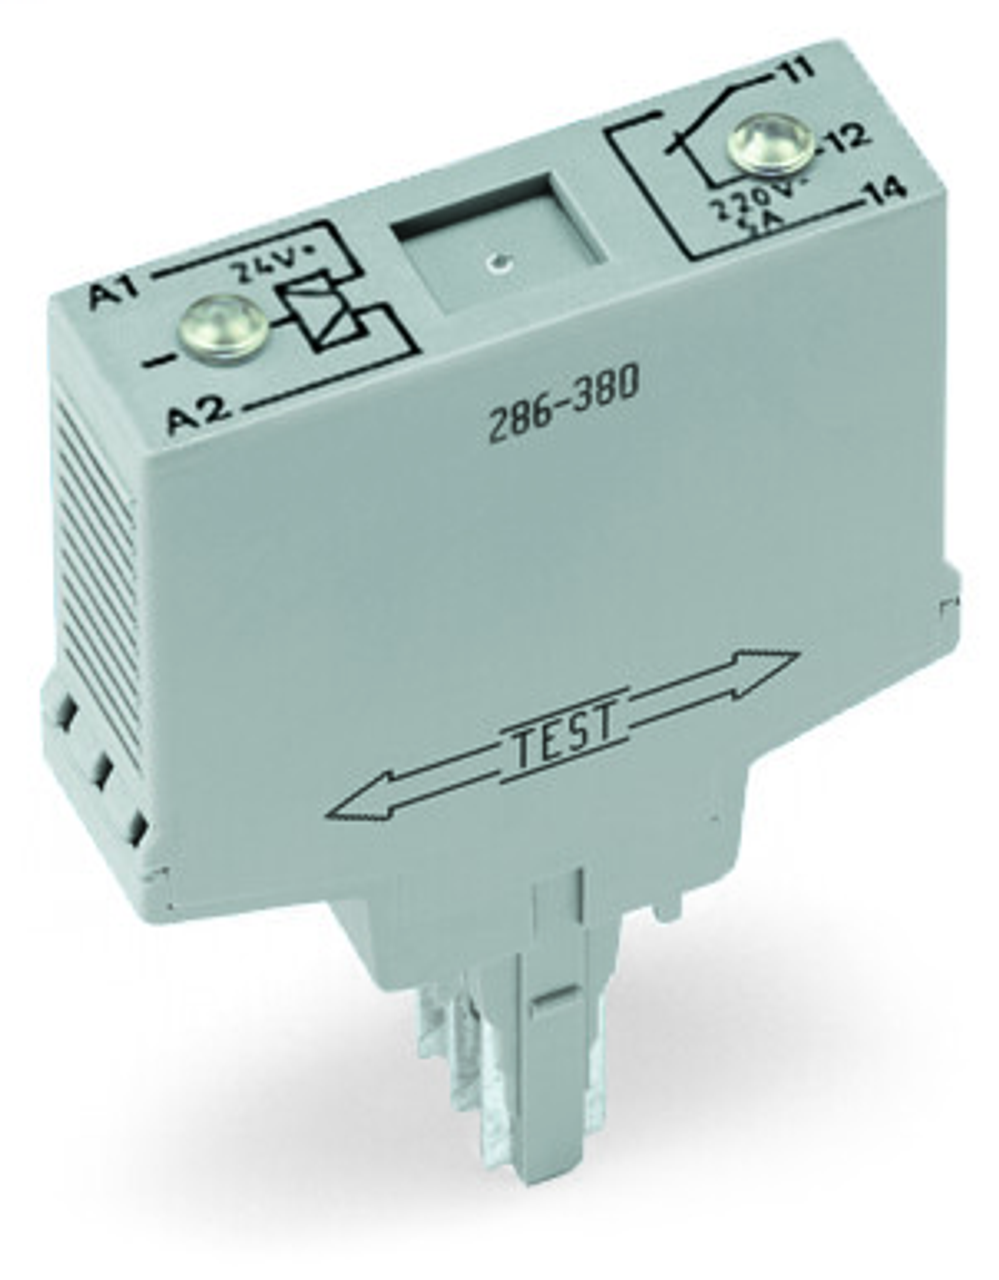 Wago 286-380 | Bistable relay module, Nominal input voltage: 24 VDC, 1  changeover con